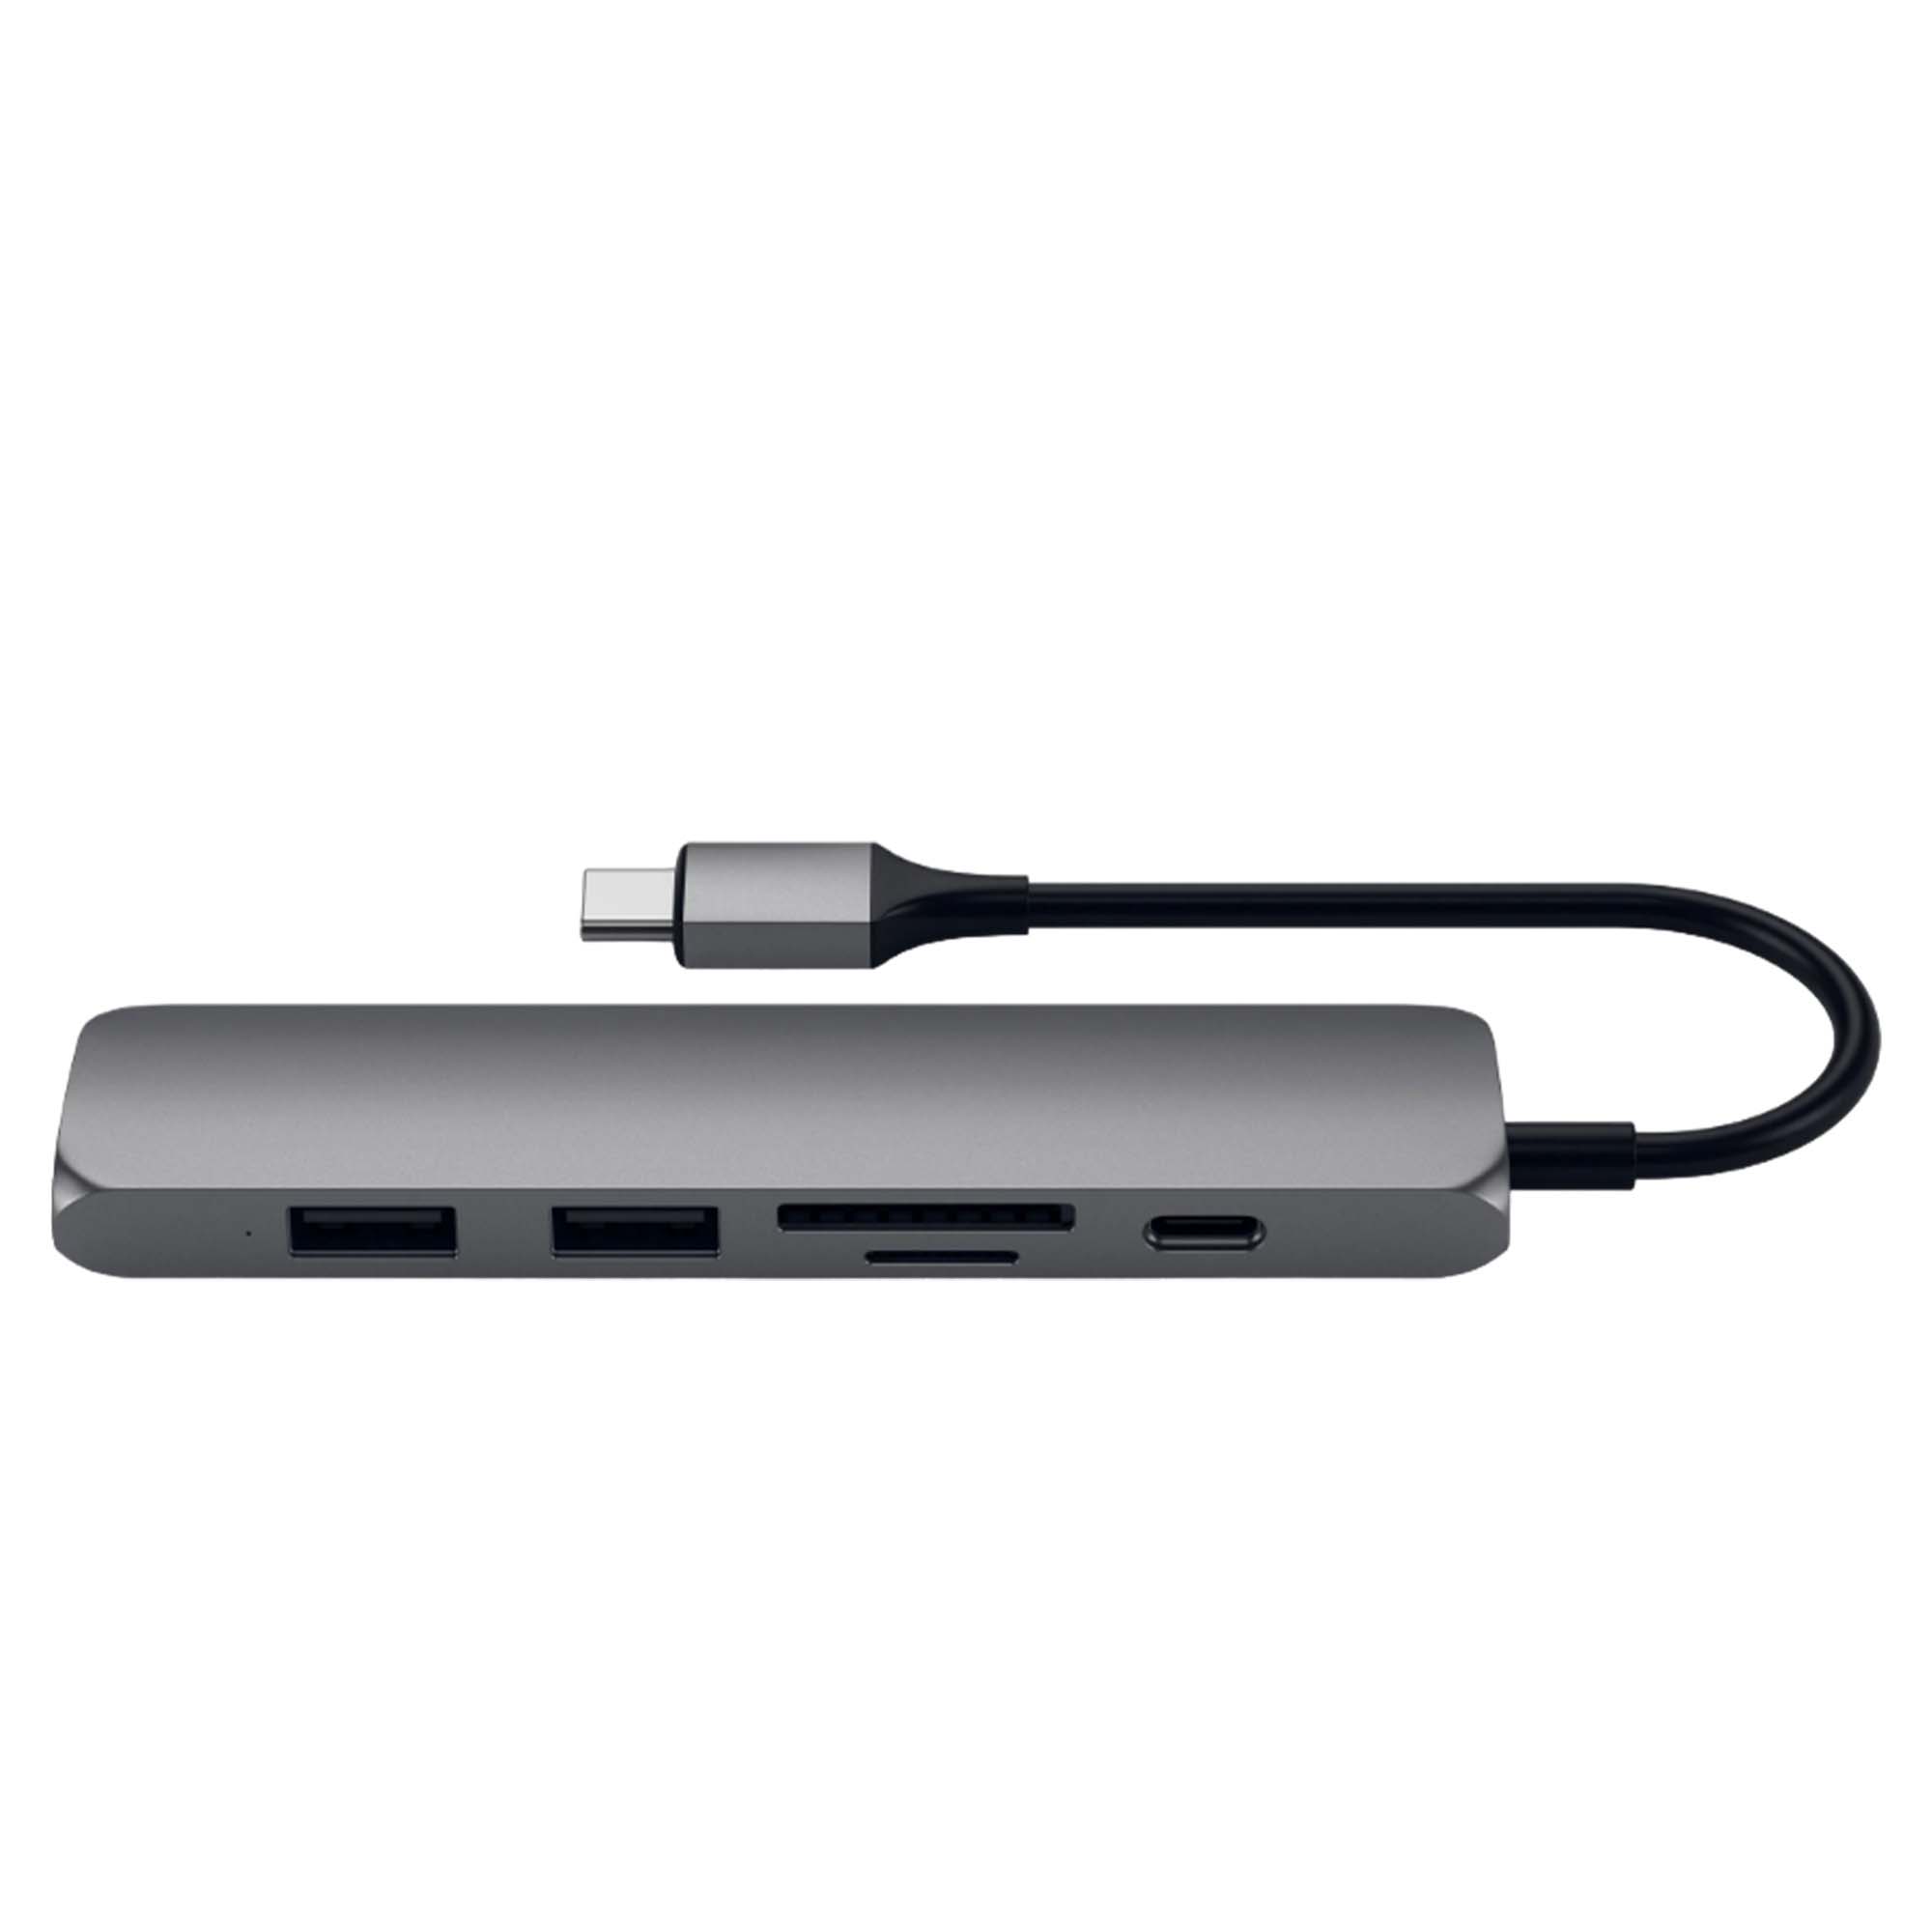 USB HUB Satechi Slim Type-C Multi-Port Adapter V2 Space Grey